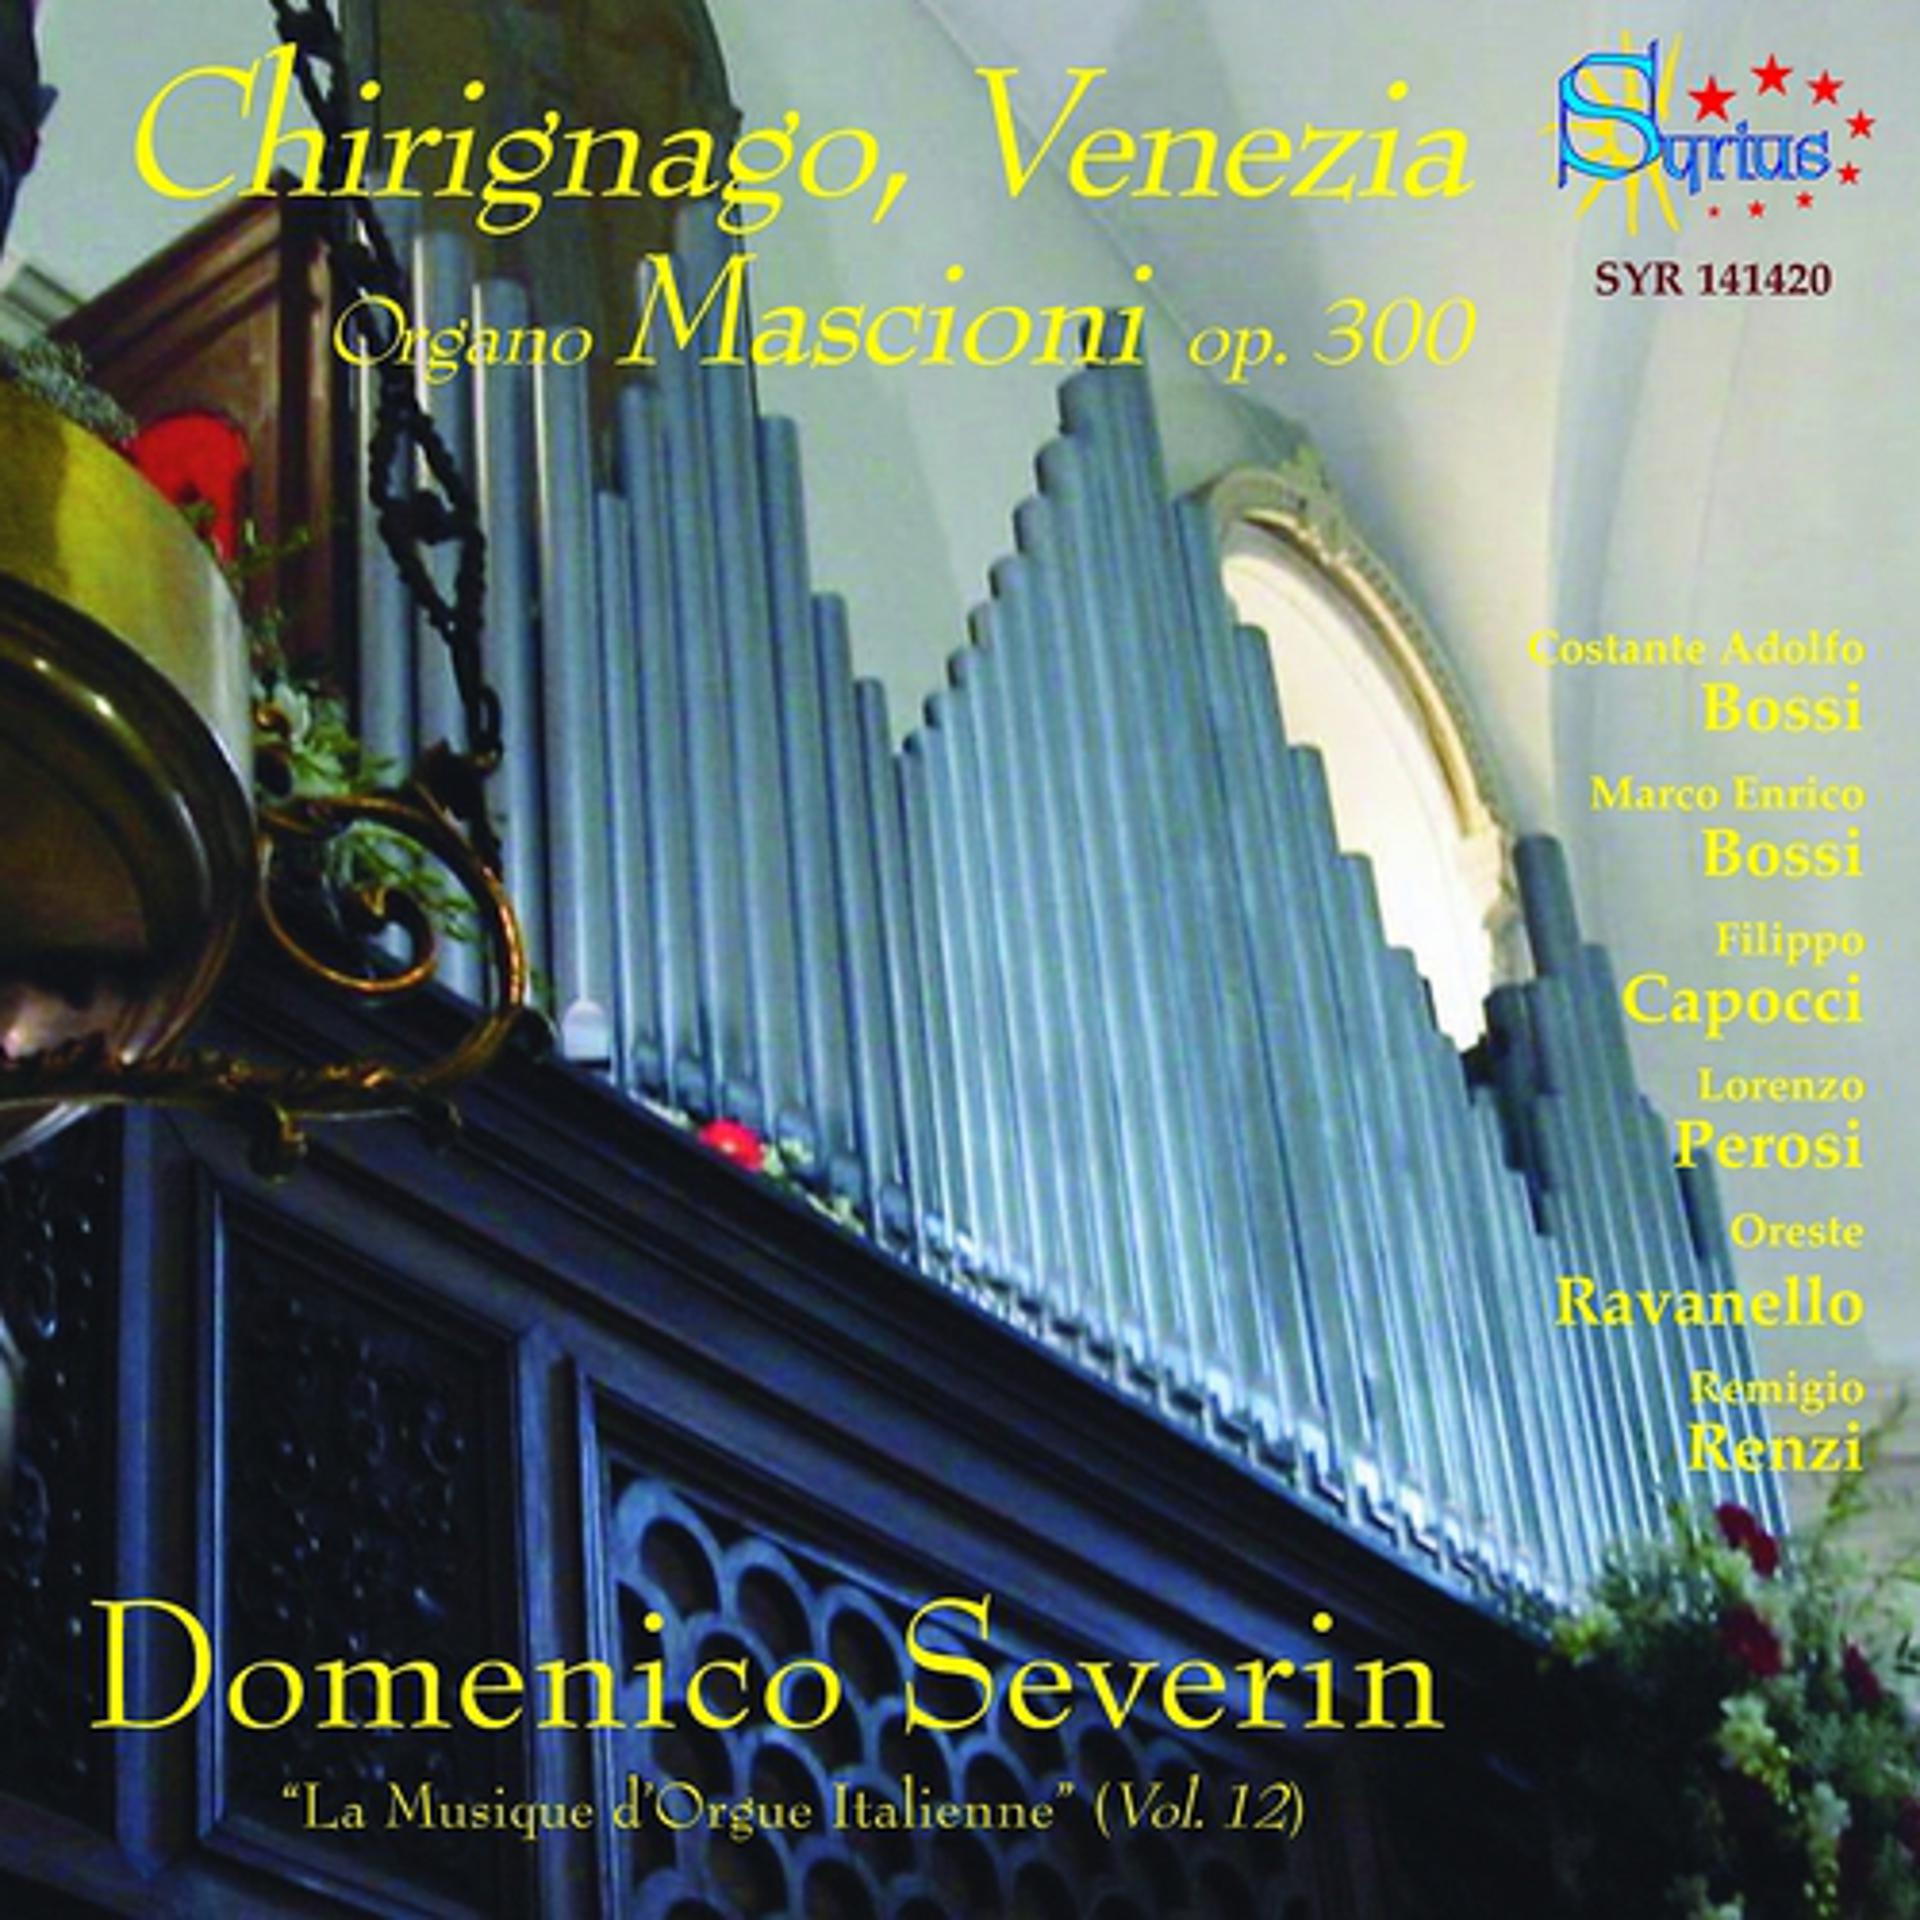 Постер альбома Ravanello, Capocci, Bossi: Chirignago, Venezia Organo Mascioni, Op. 300